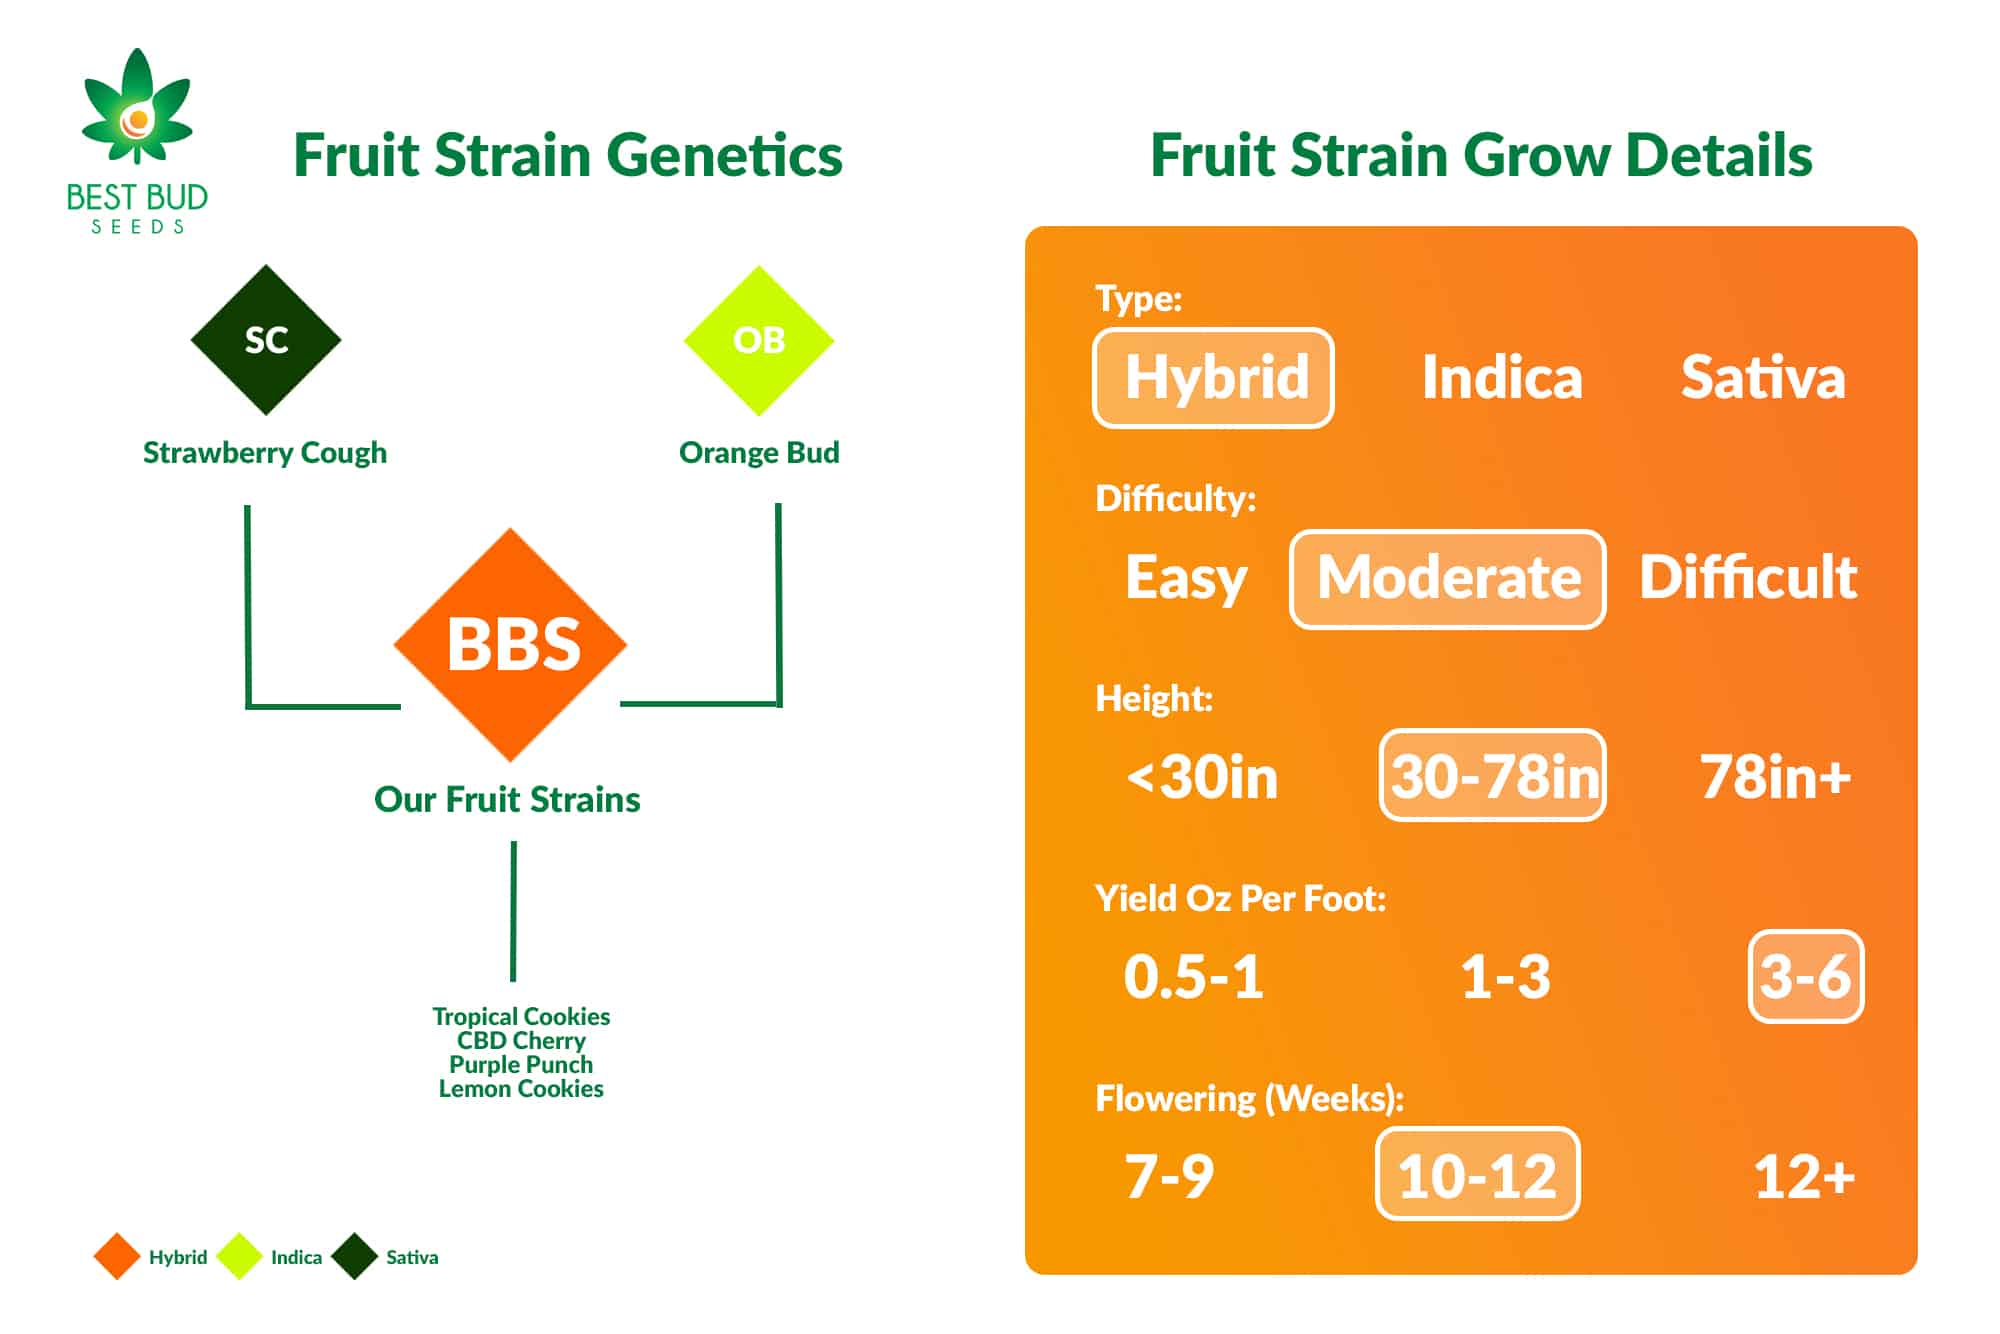 Best Bud Seeds Fruit Strain Genetics and Grow Details